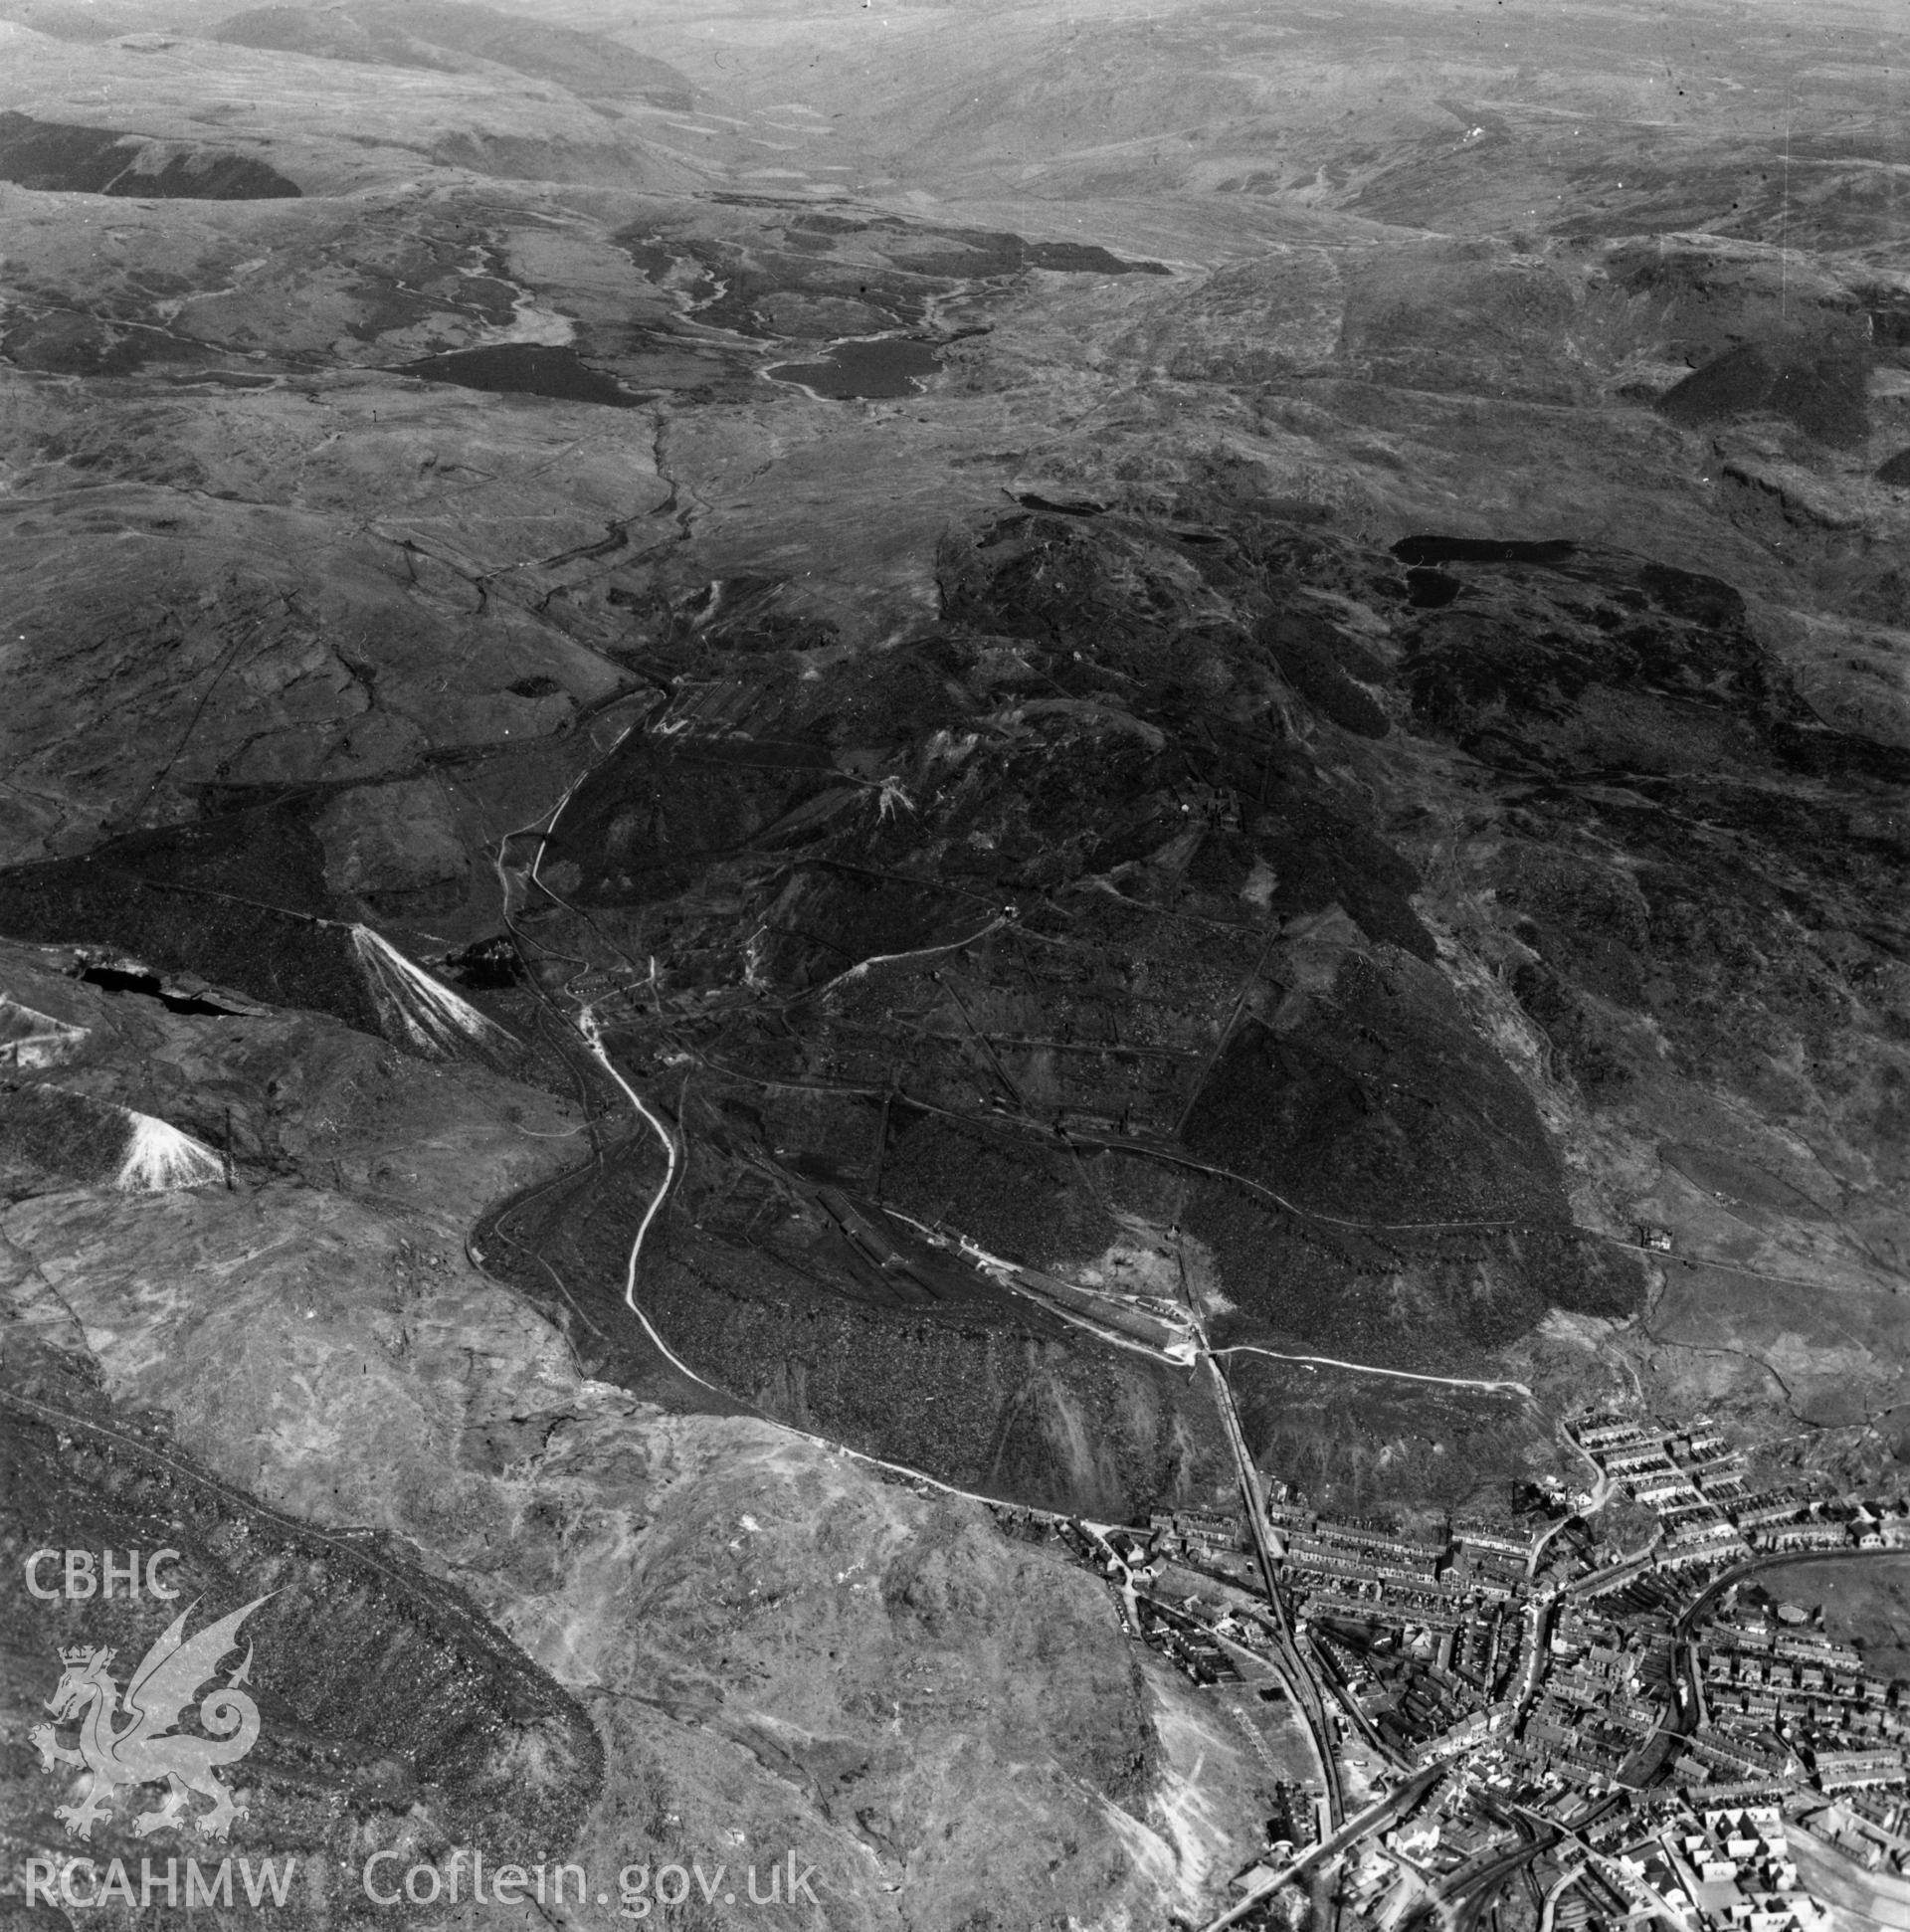 View of Oakley Slate quarries Co. Ltd., showing Blaenau Ffestiniog in foreground. Oblique aerial photograph, 5?" cut roll film.